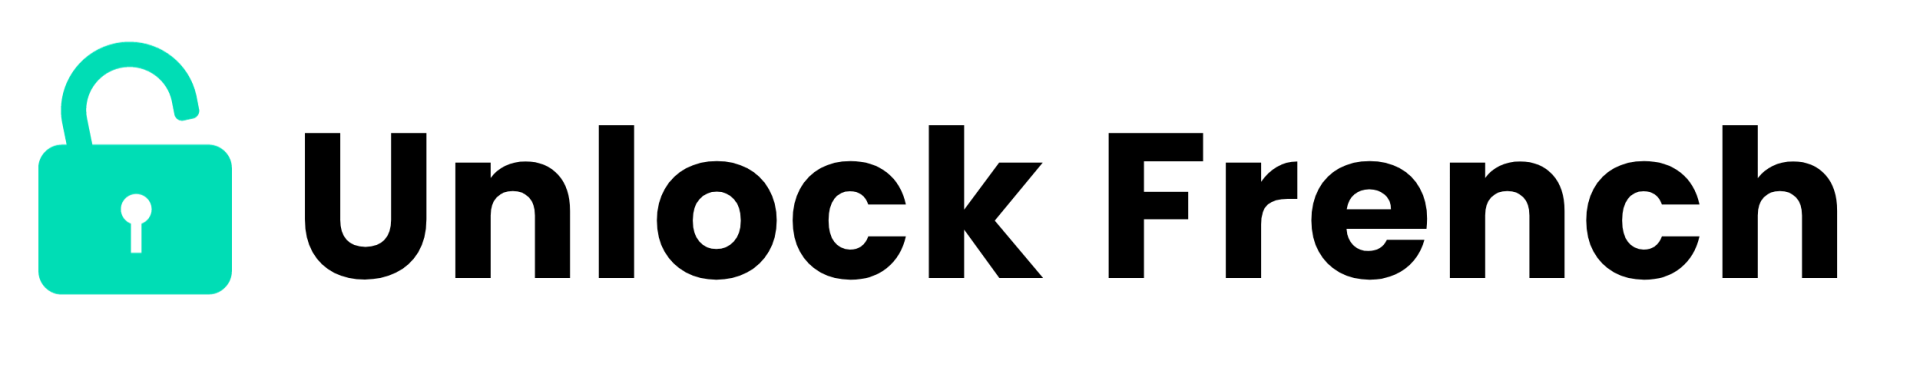 Unlock French Logo